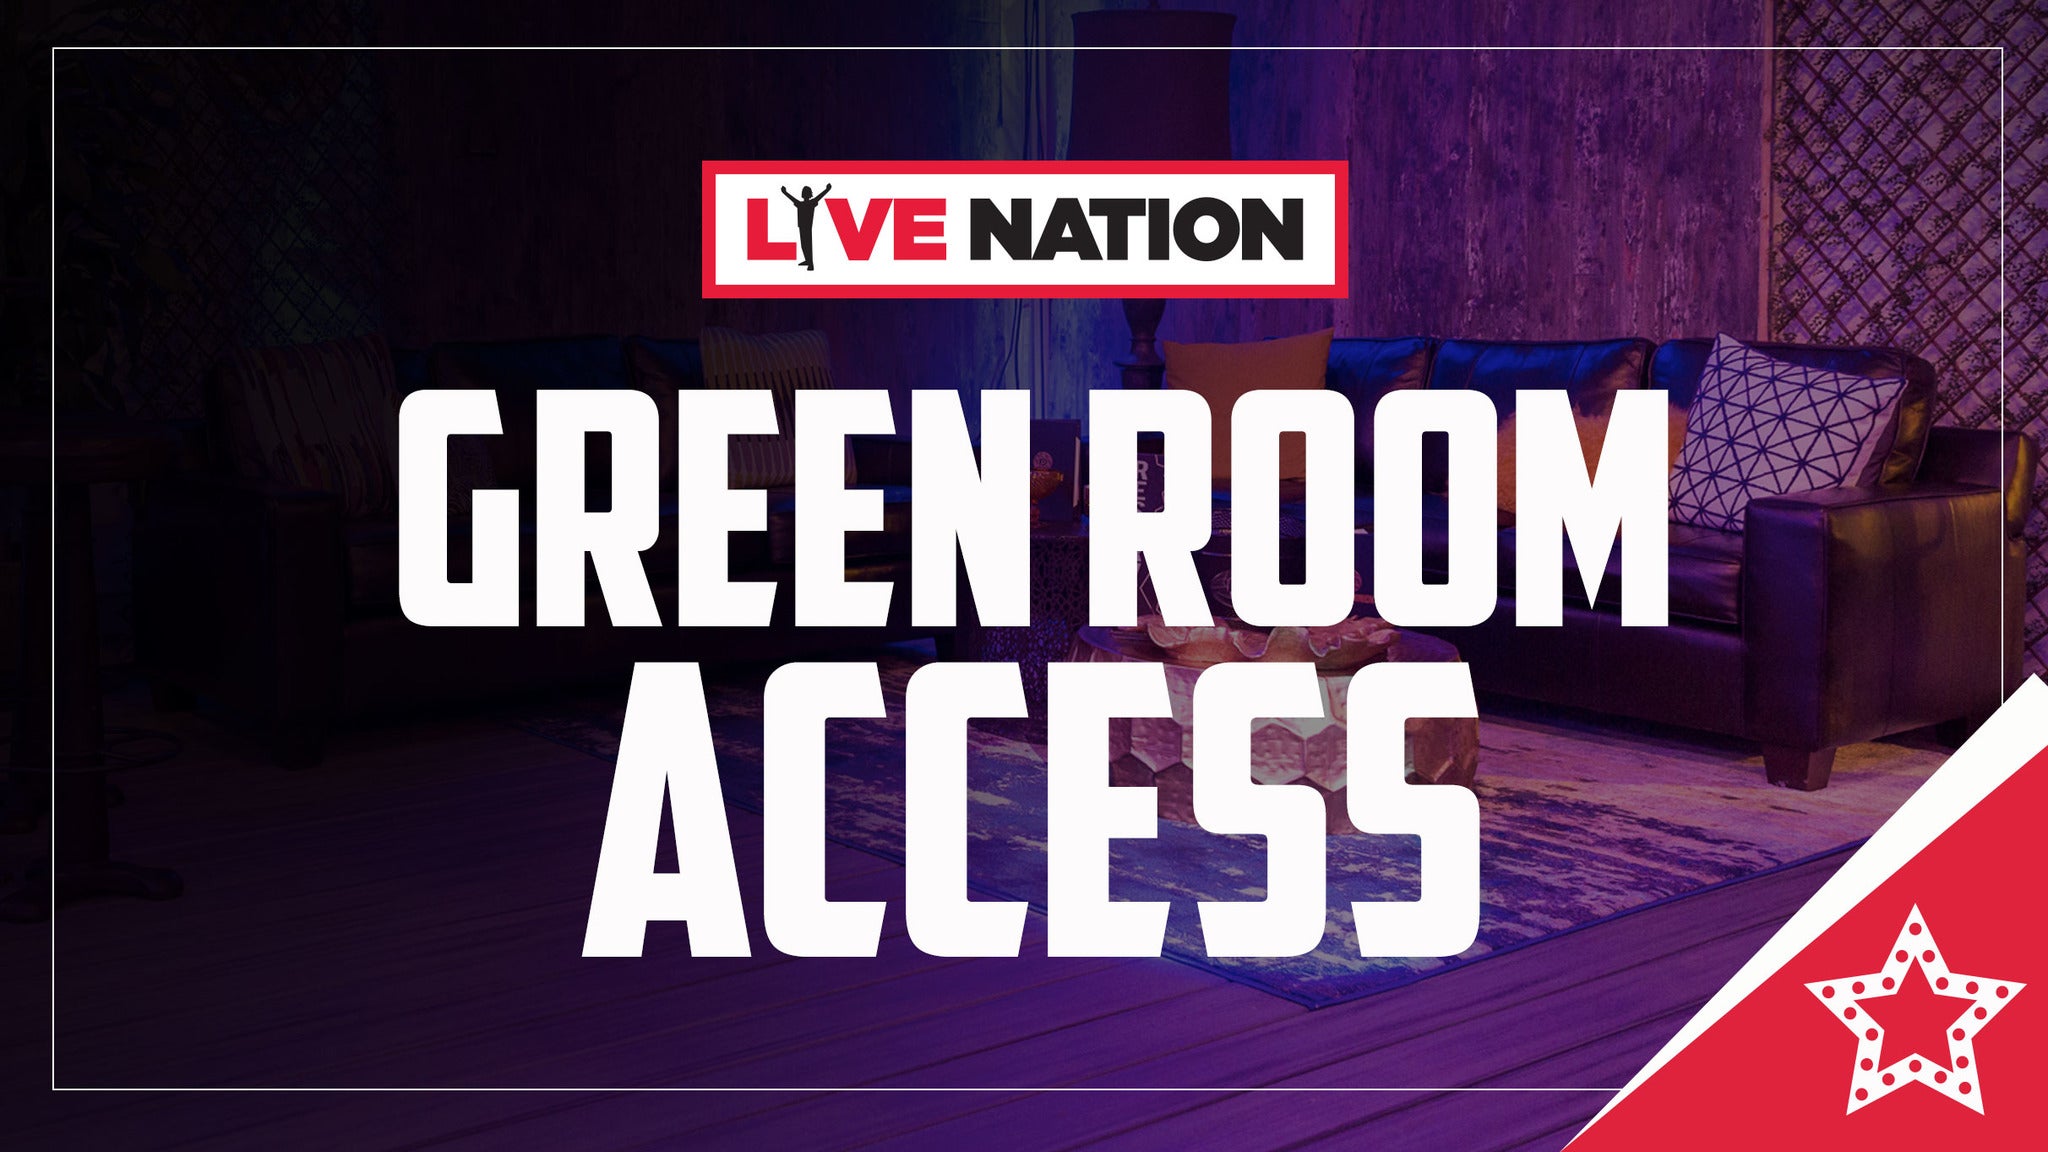 Live Nation Green Room Access Tickets | Event Dates & Schedule | comicsahoy.com